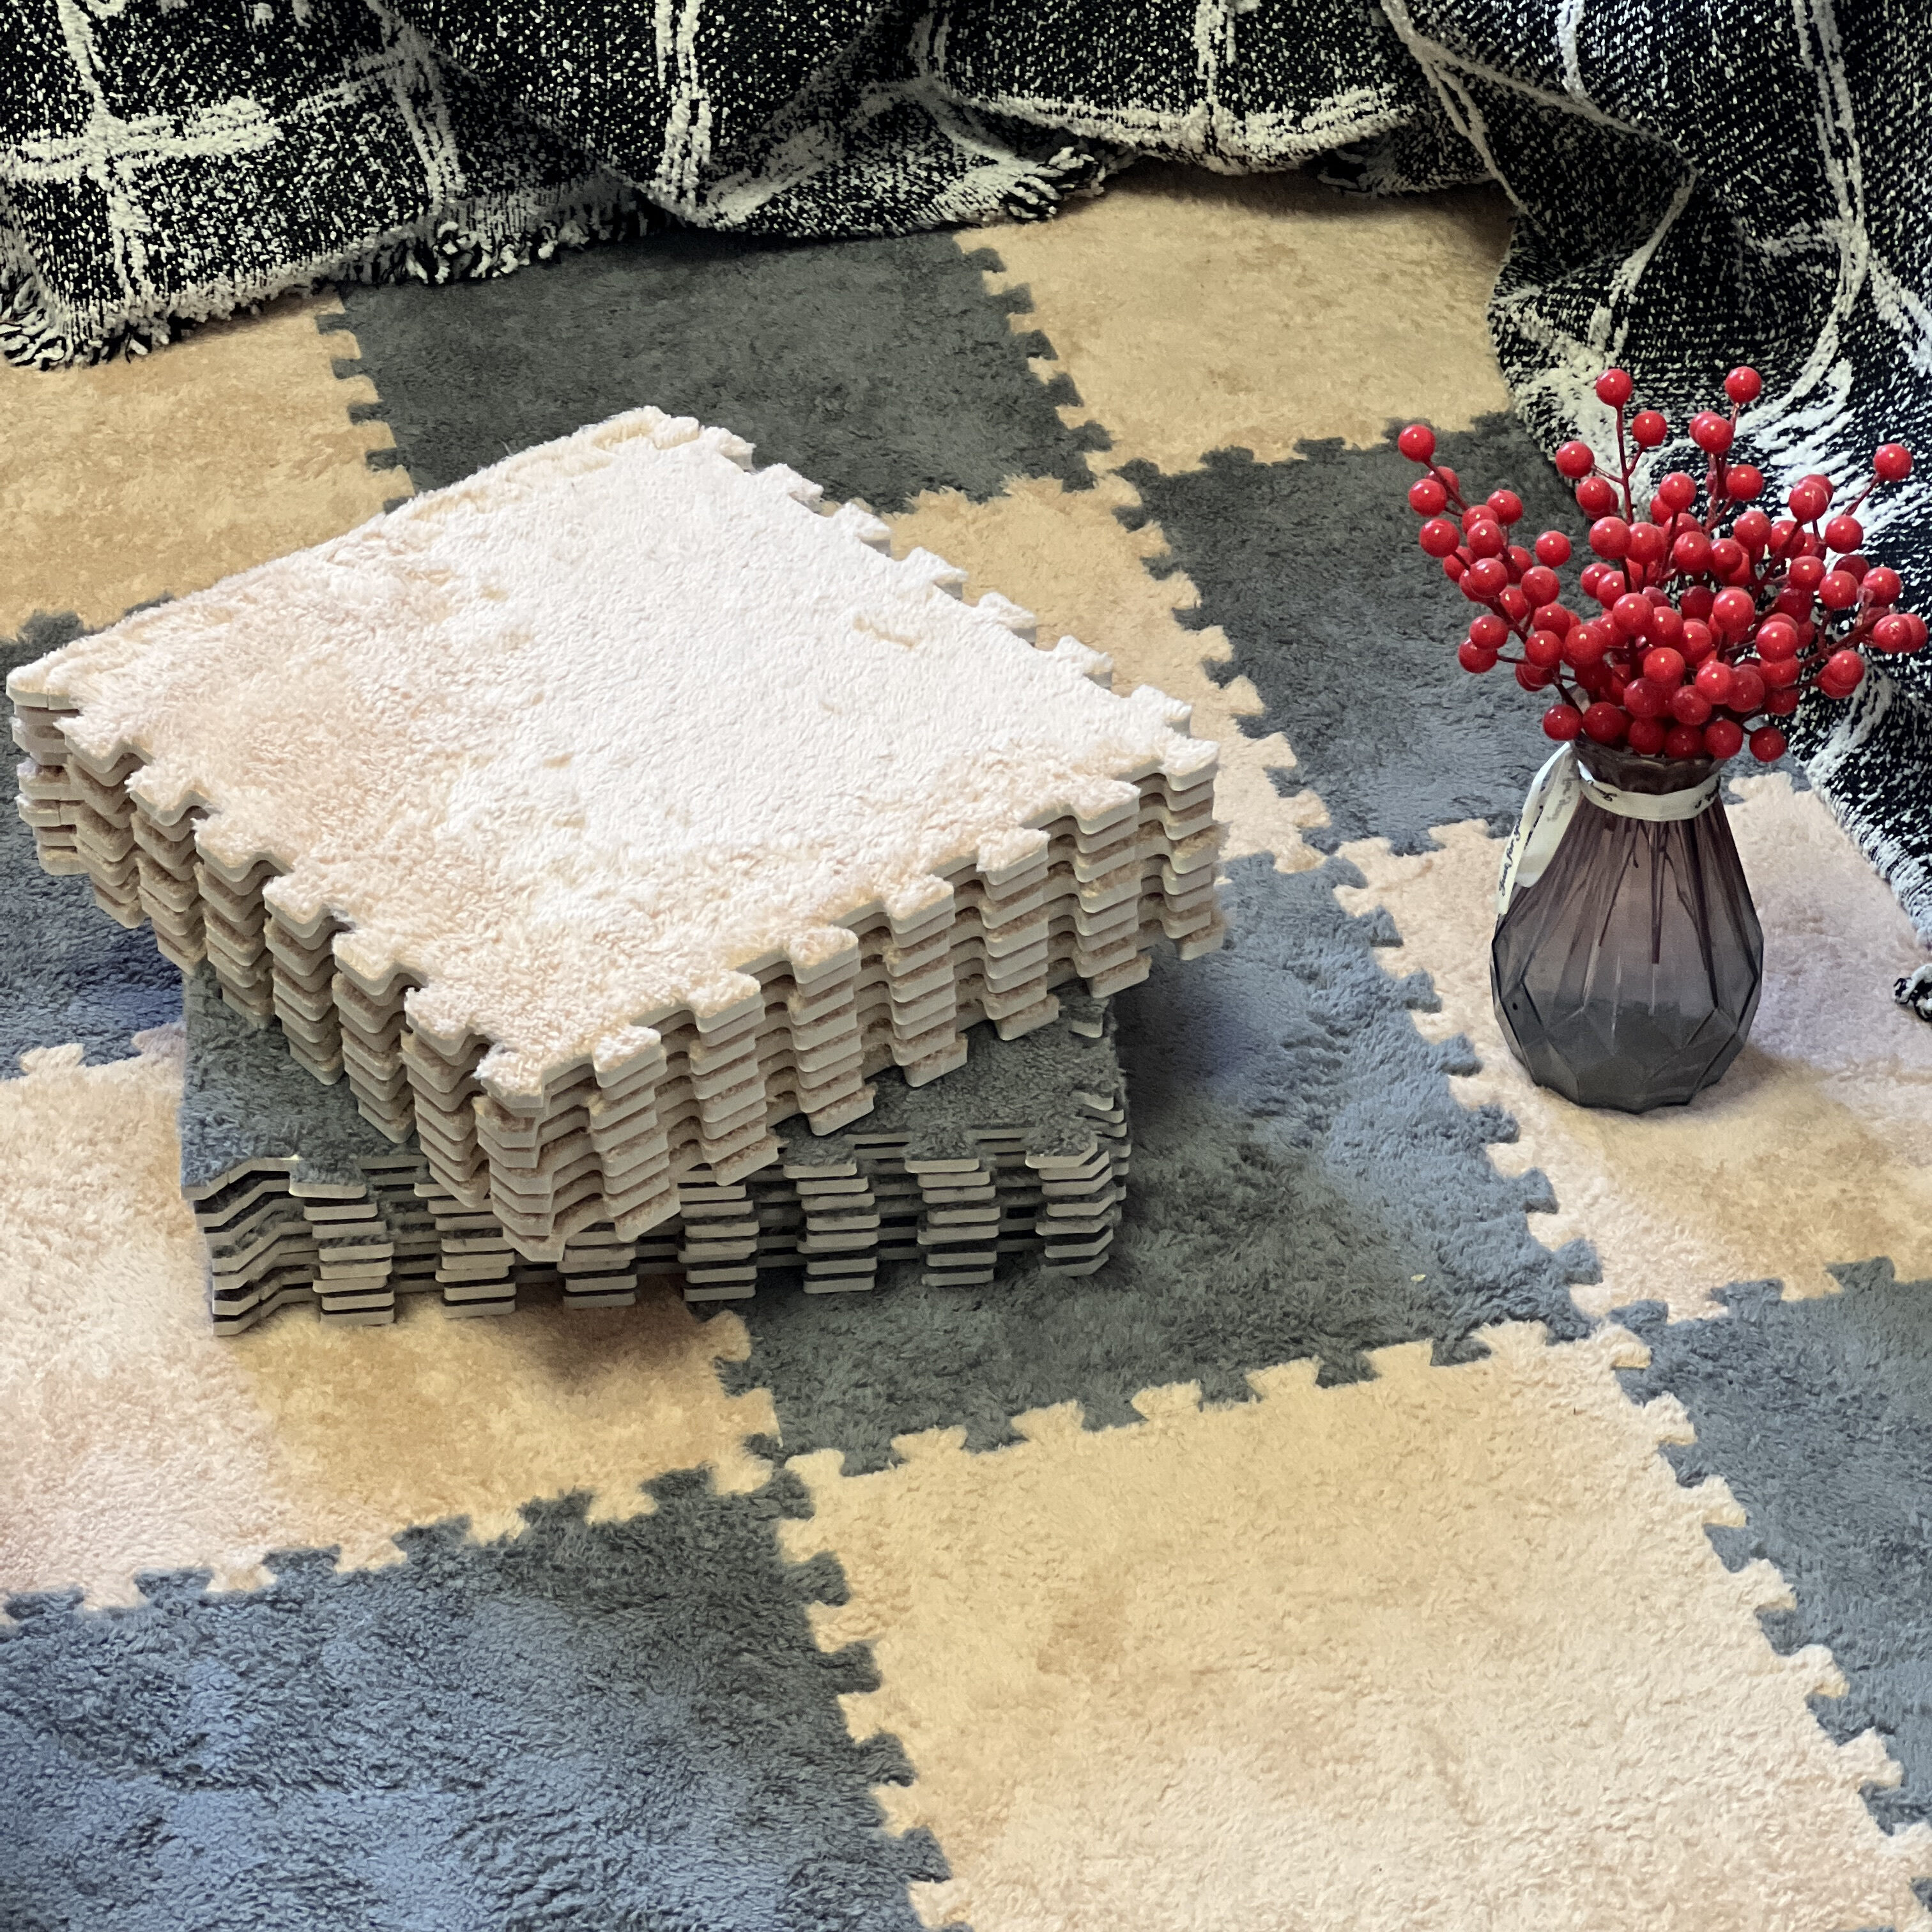 12 X 12 Inch Interlocking Carpet Tiles,10 Pieces EVA Foam Mats, Soft Fluffy  Plush Area Rugs Floor Tiles, Puzzle Play Mat for Living Room